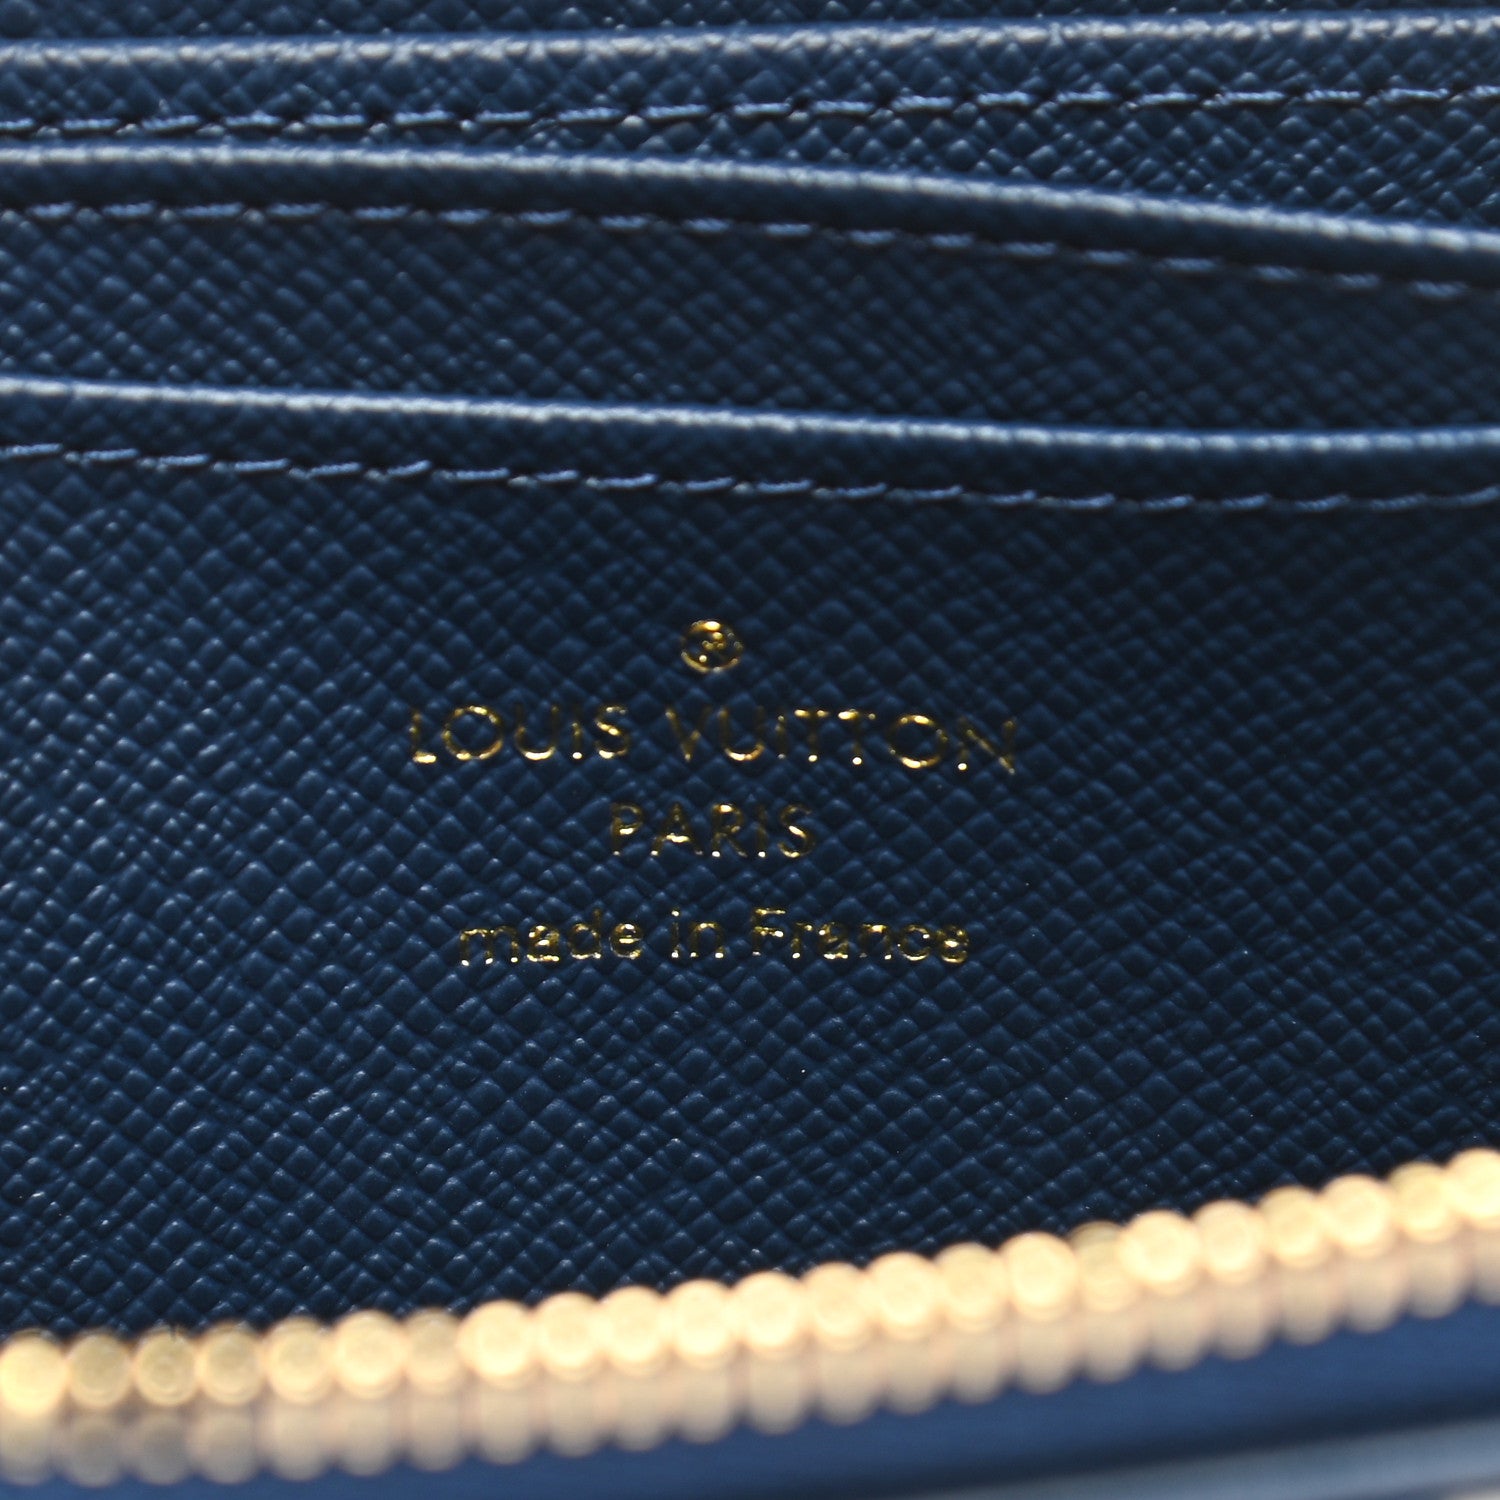 Zippy wallet Louis Vuitton Blue in Denim - Jeans - 38977238